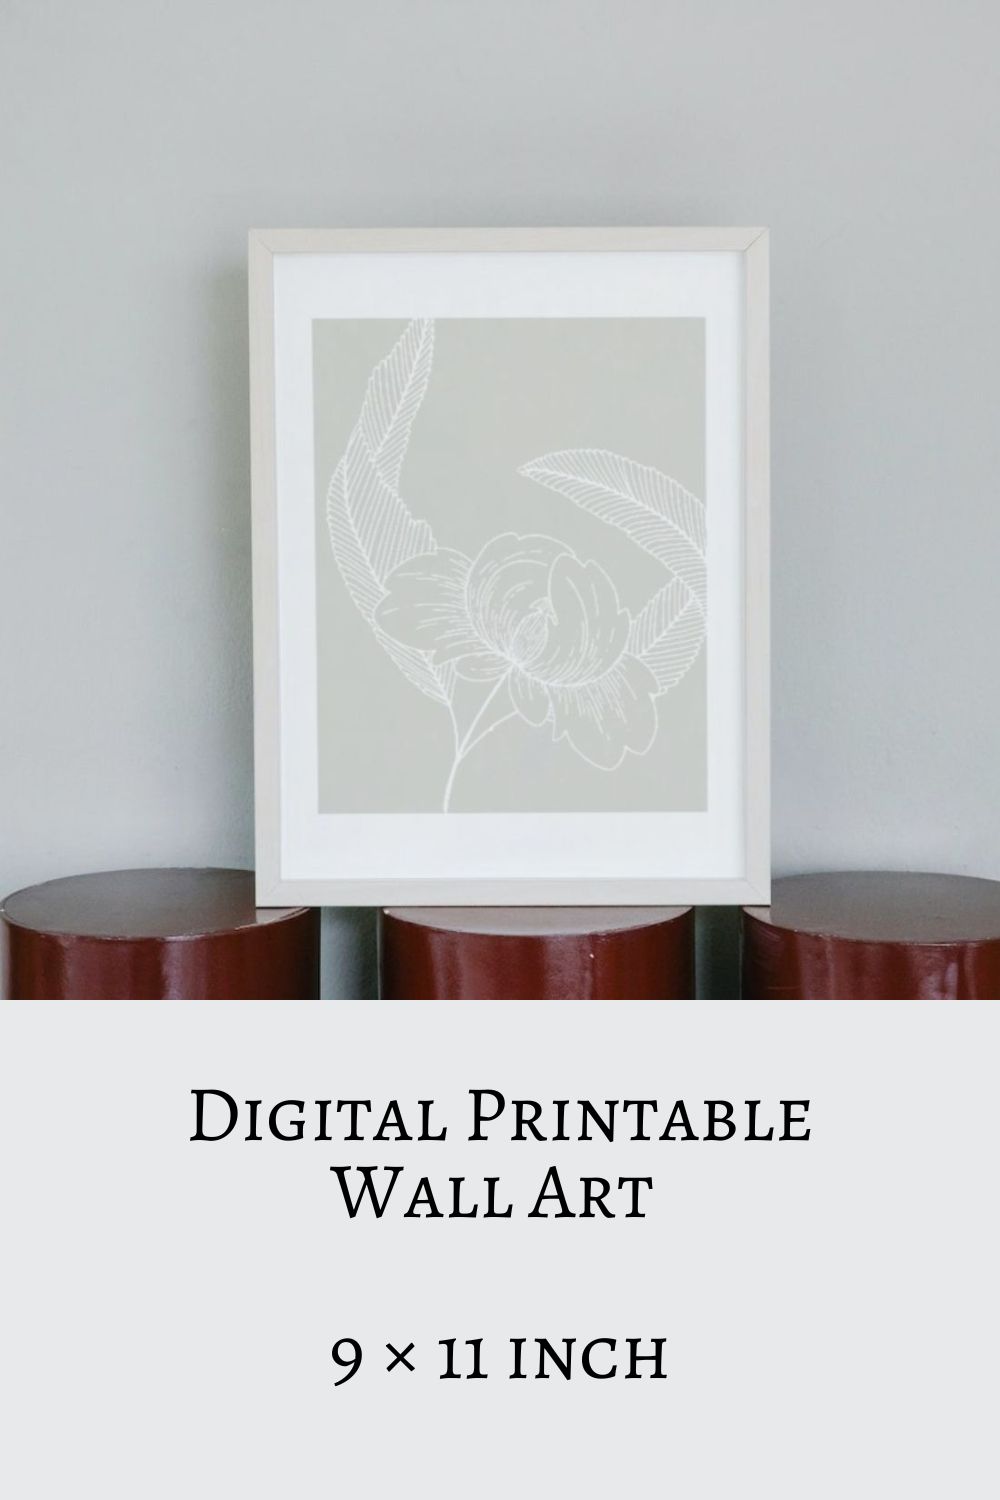 Digital Printable Wall Art pinterest image.